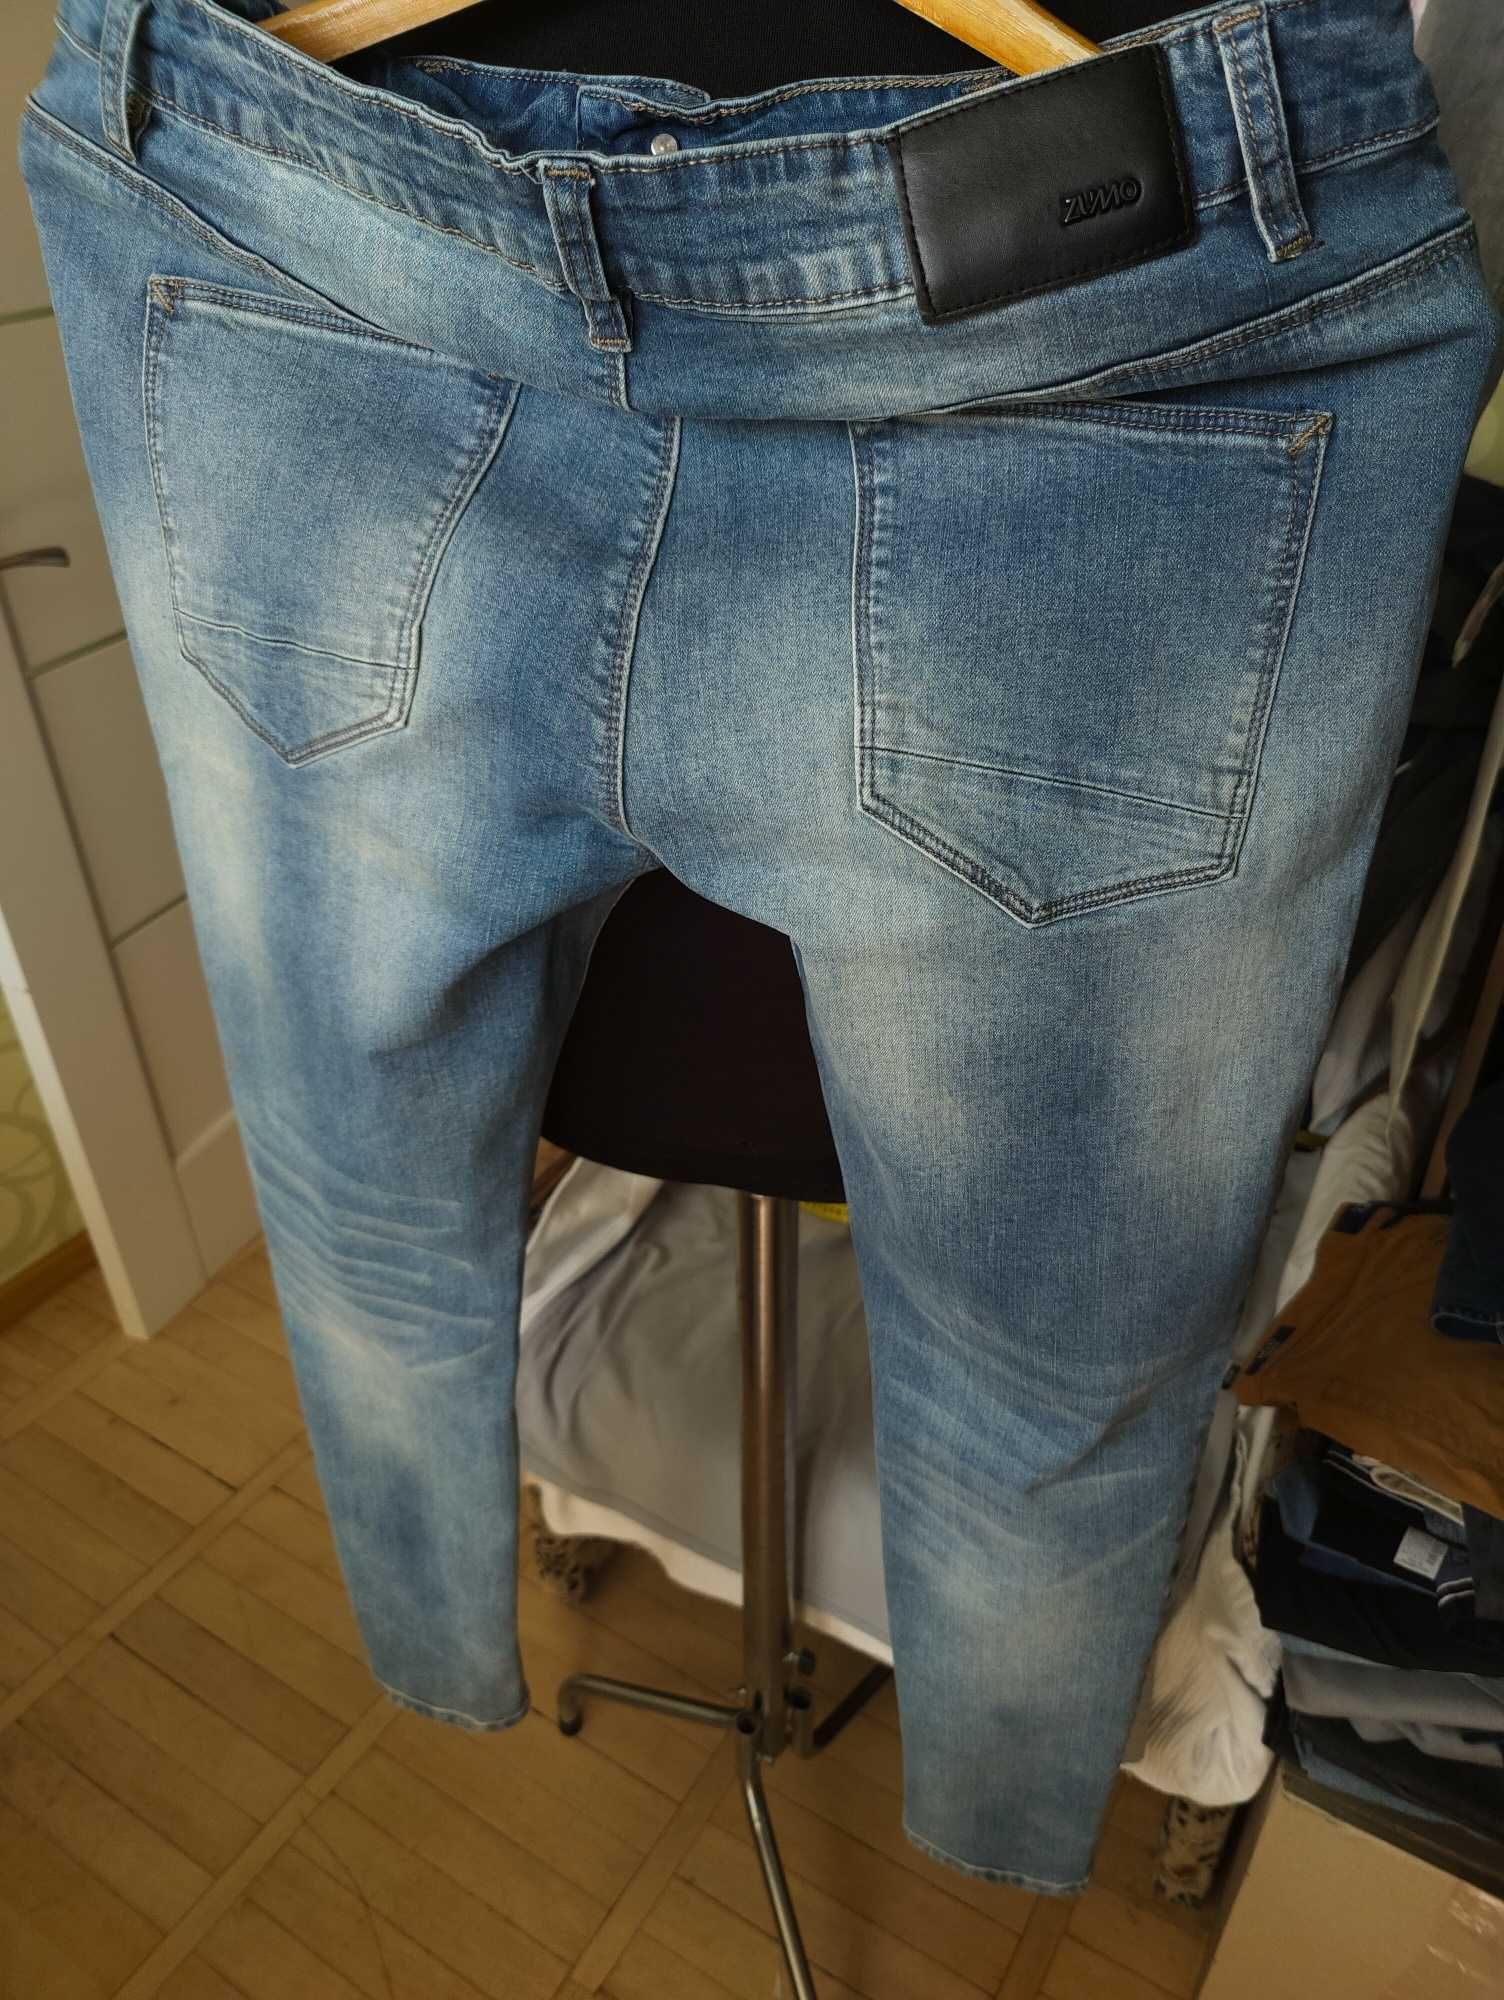 Джинсы Zumo jeans Steve Germany w32 stretch mid blue.